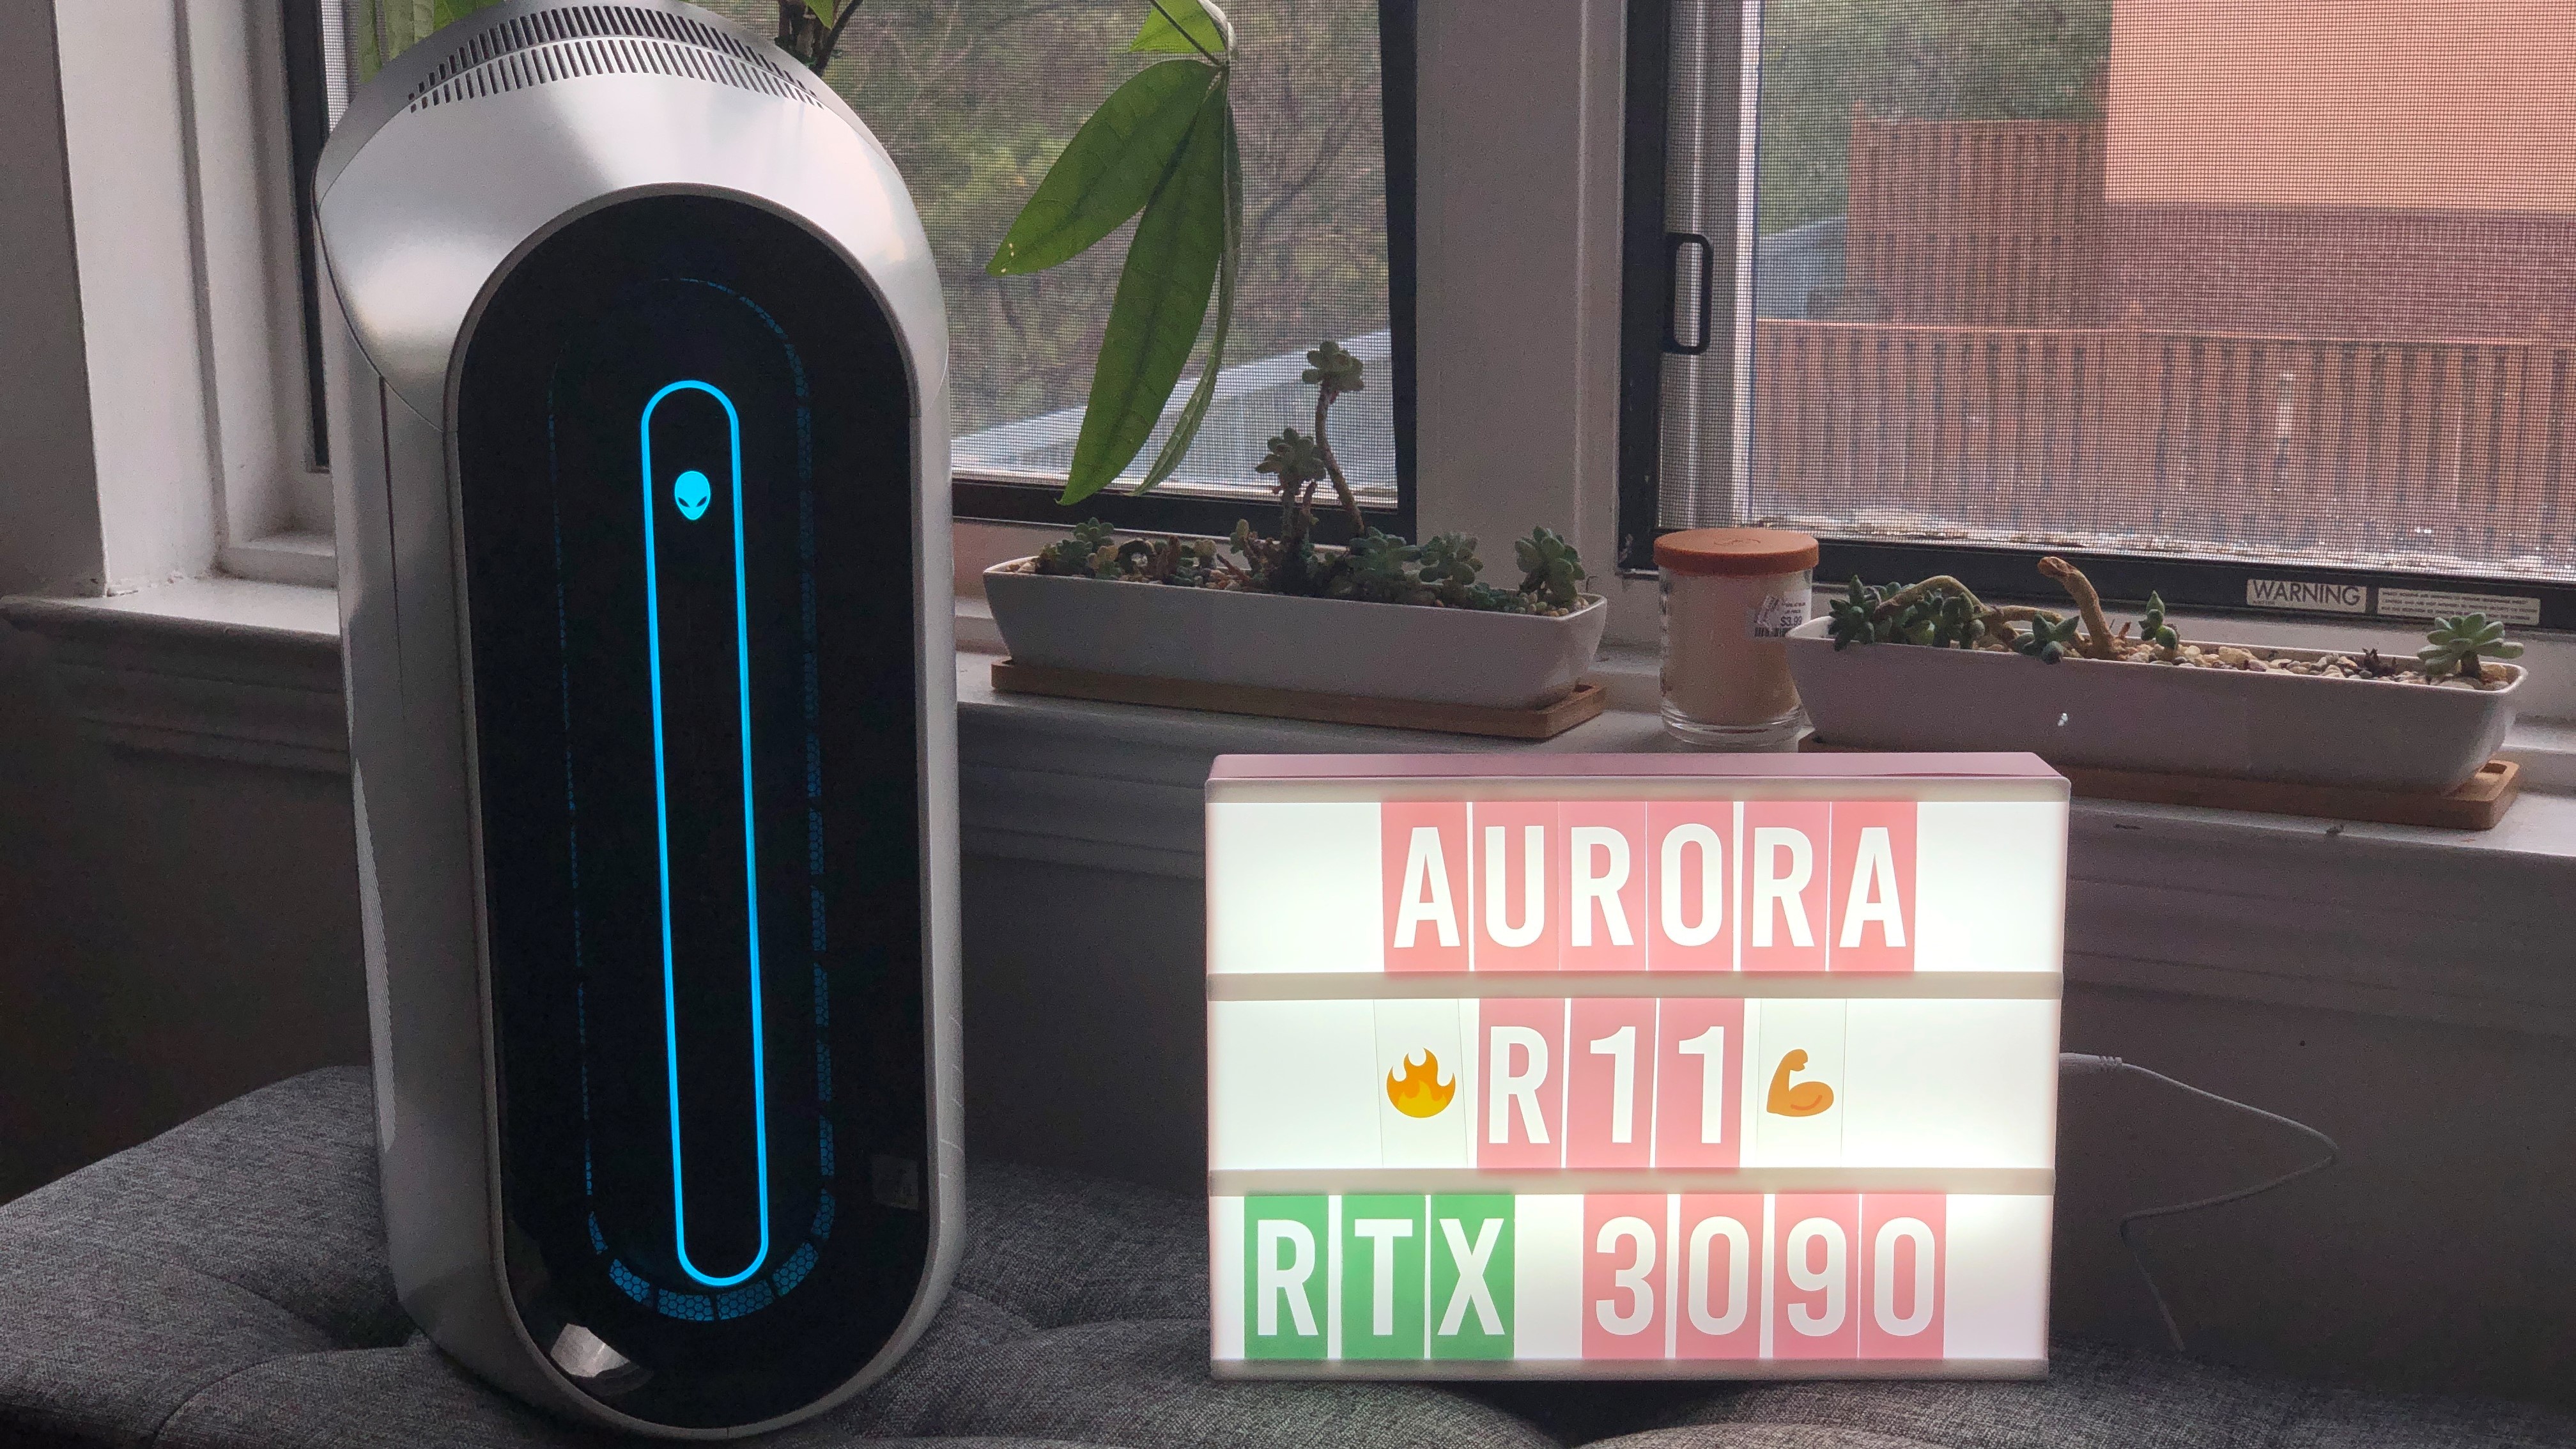  Alienware Aurora R11 review 